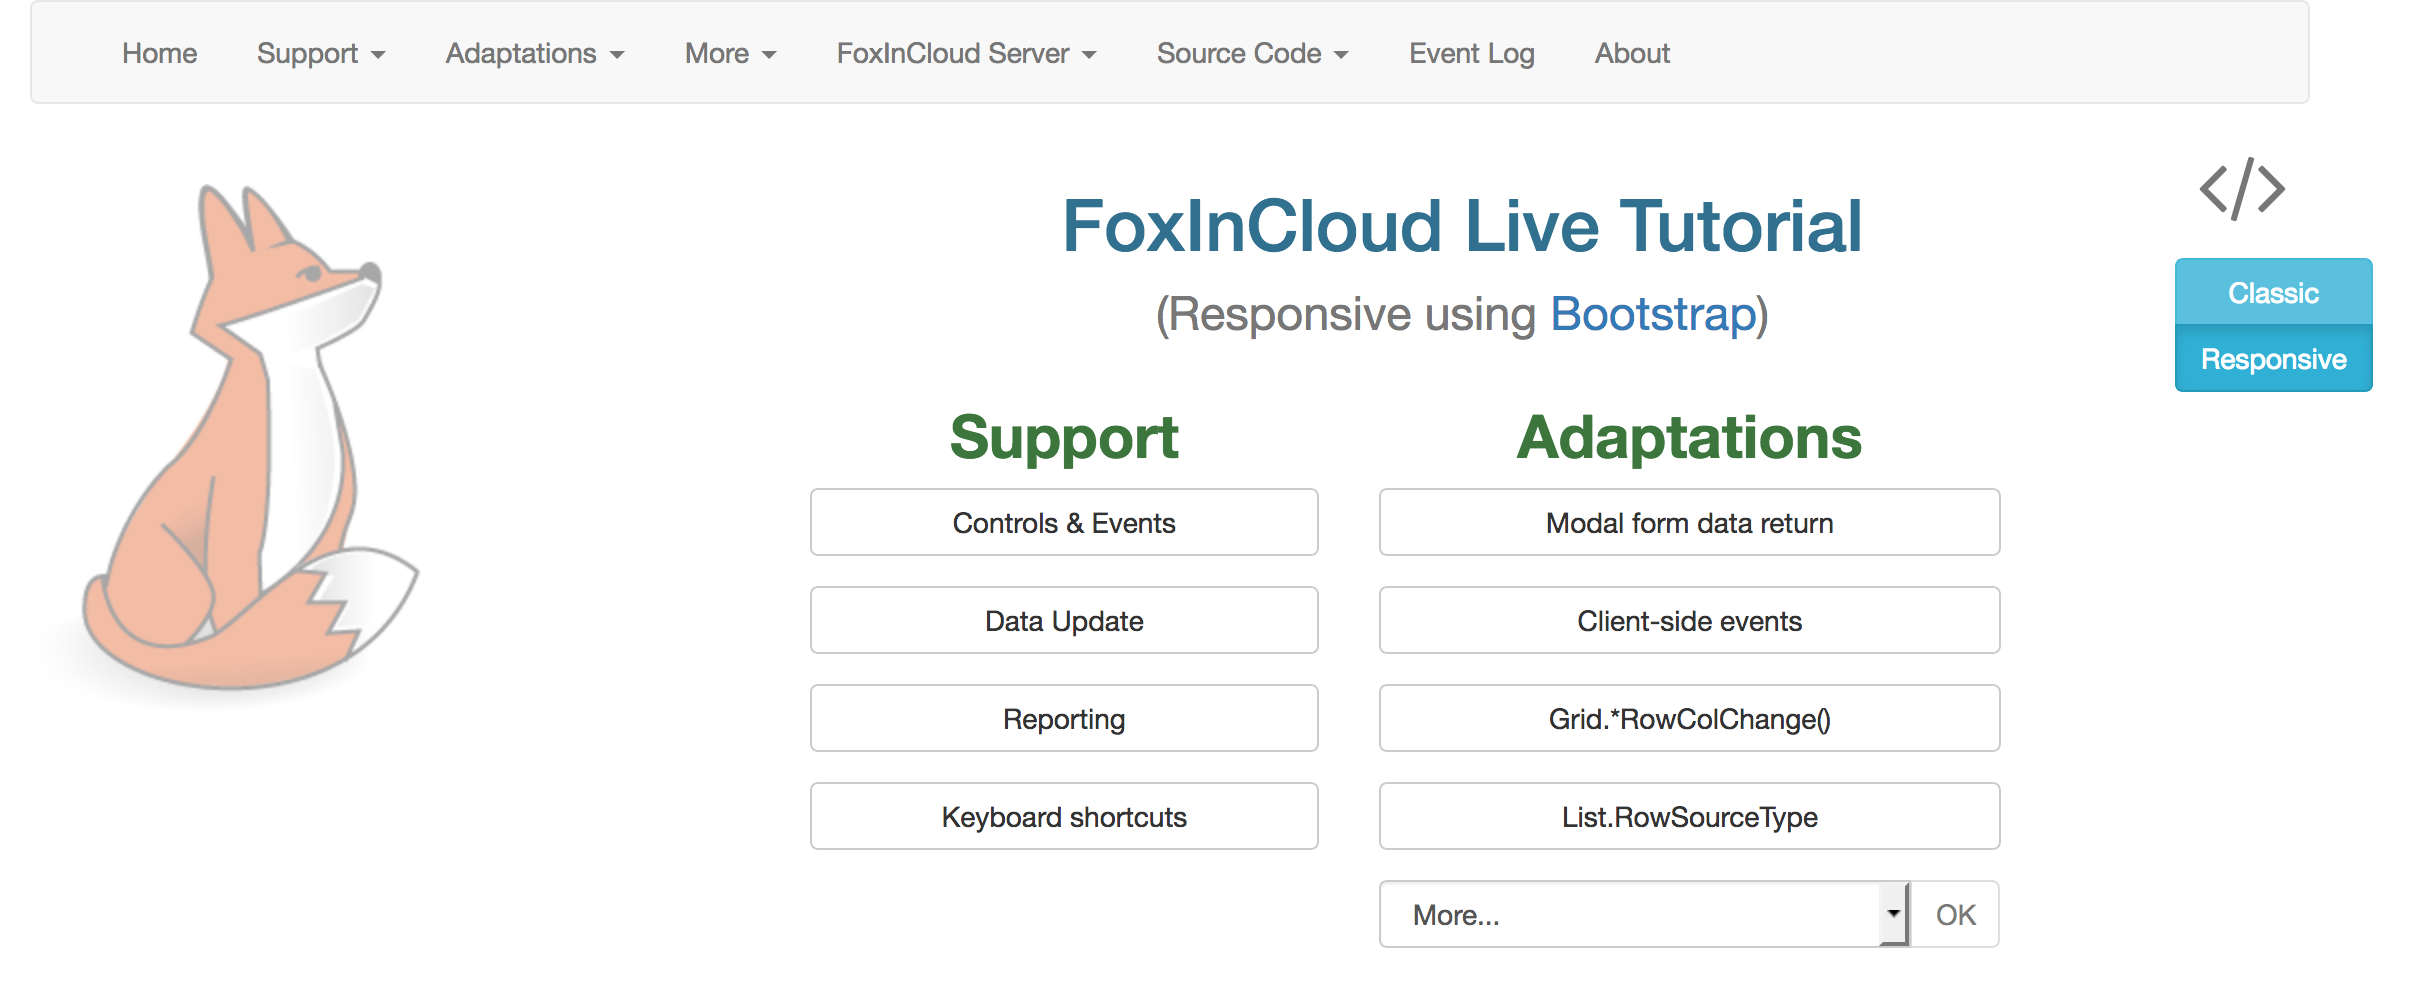 FoxInCloud Live Tutorial, responsive mode